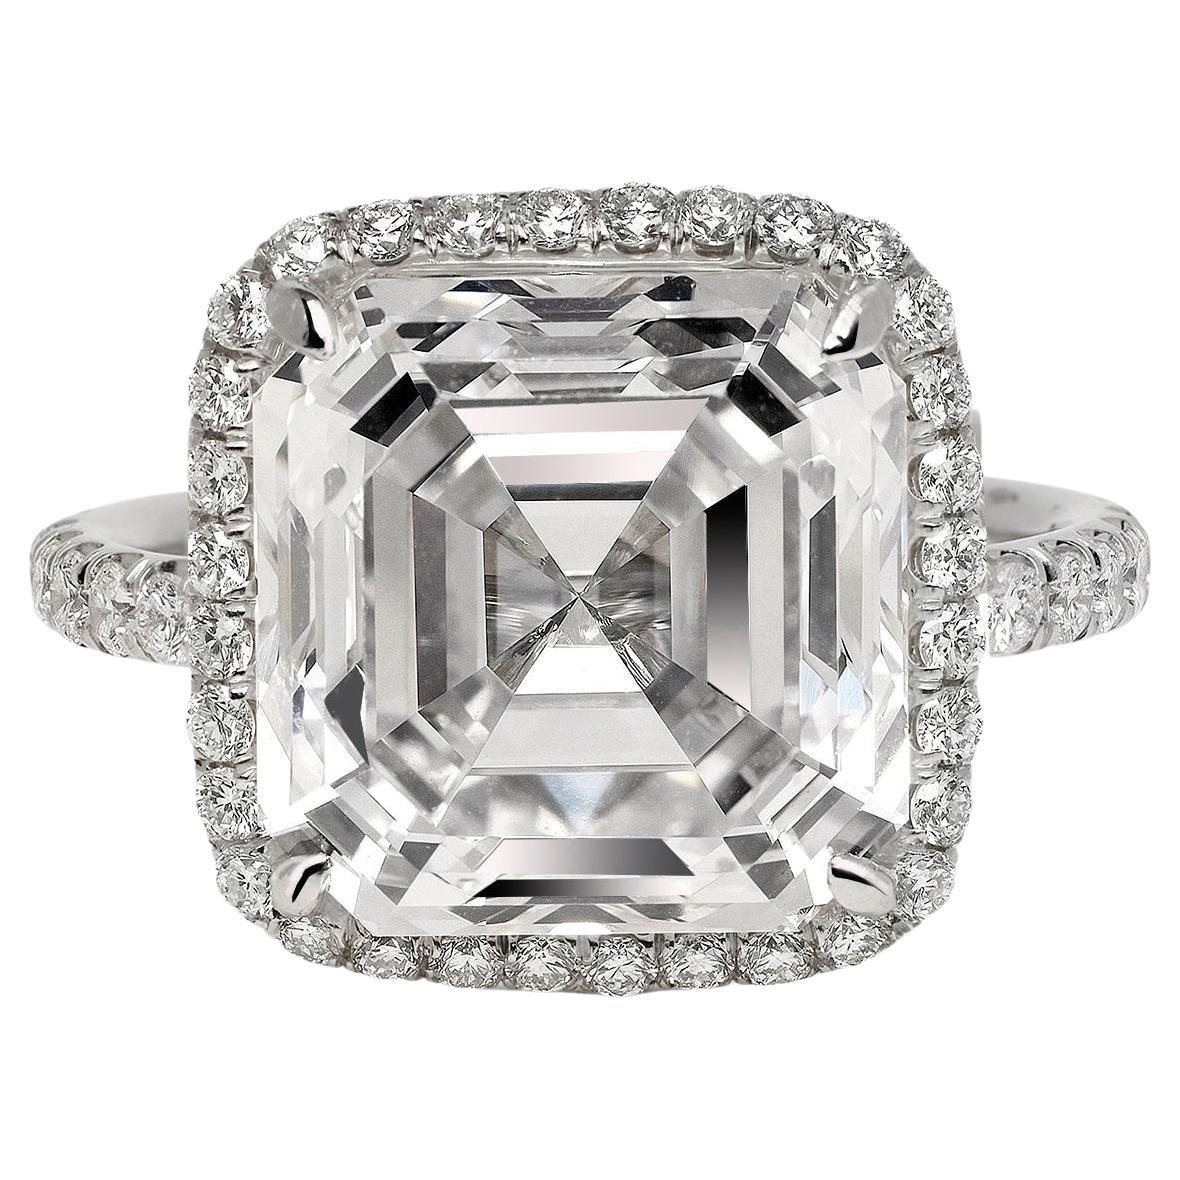 10 Carats Asscher Cut Diamond Engagement Ring GIA Certified J VS2 For Sale